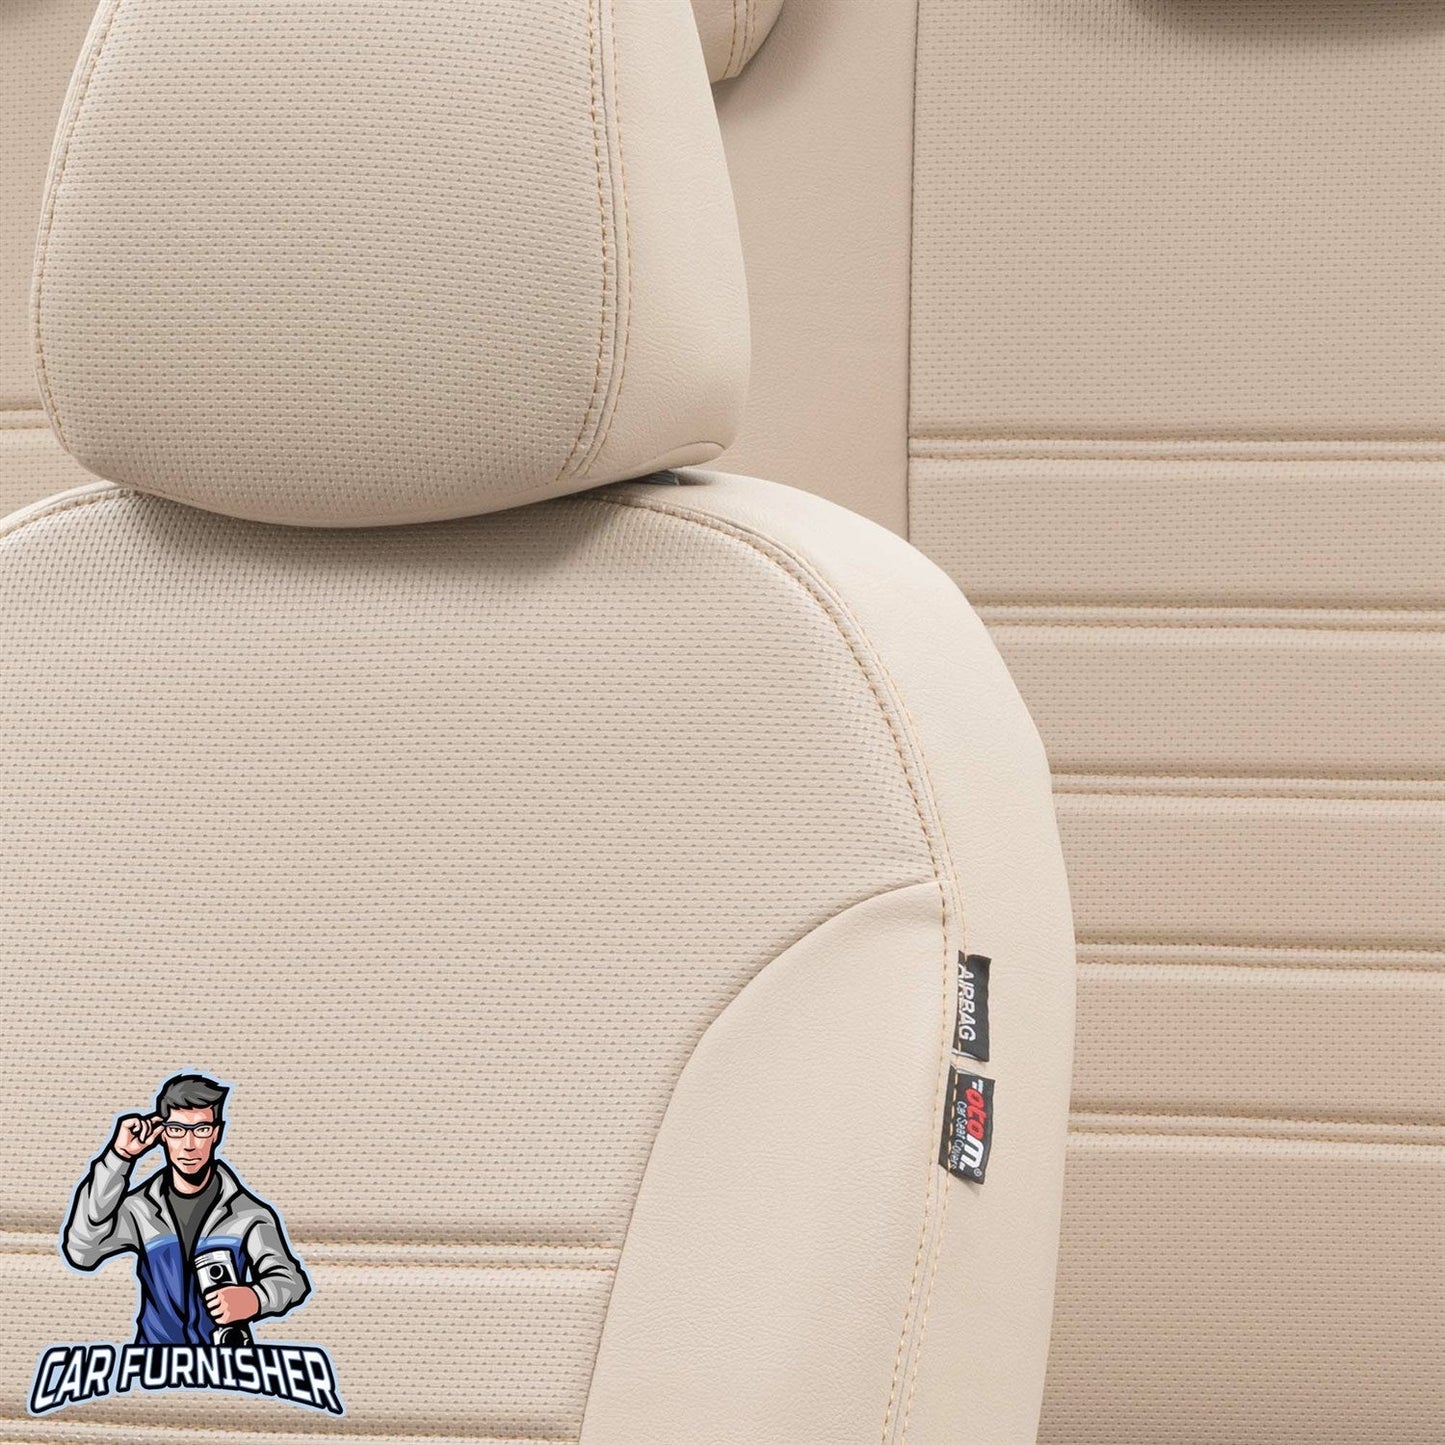 Isuzu Champion Seat Cover New York Leather Design Beige Leather